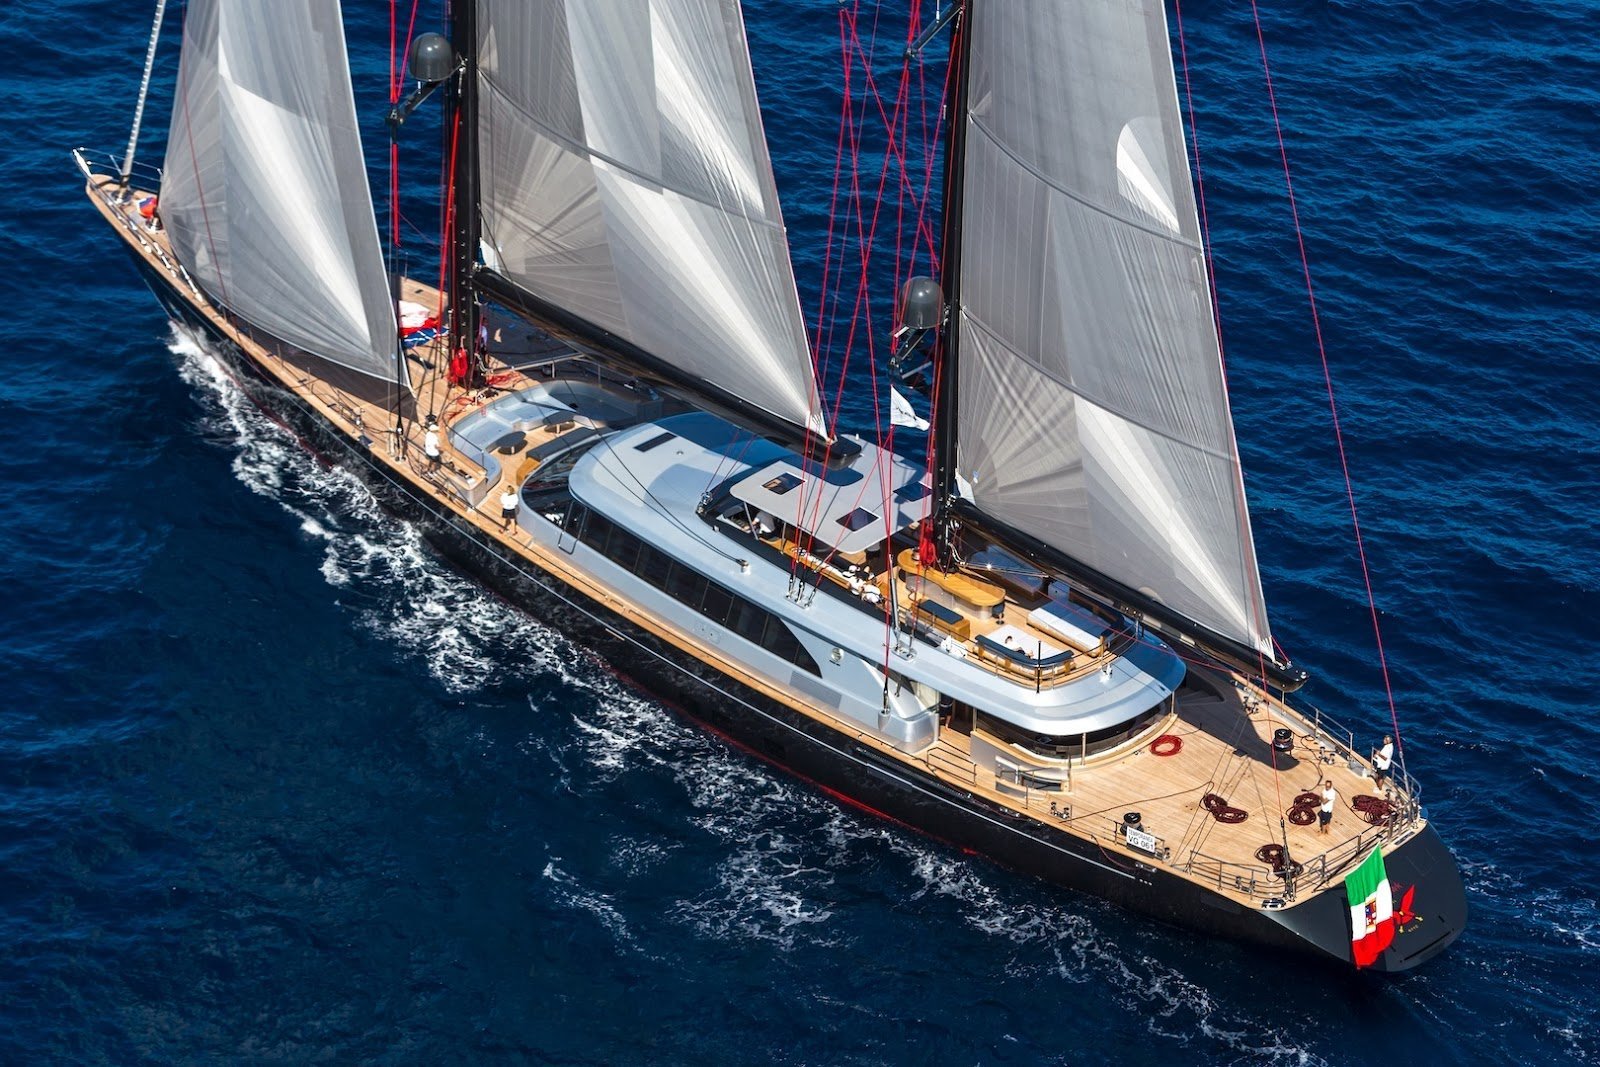 SEAHAWK Yacht • Adam Alpert $35M Sailing Superyacht